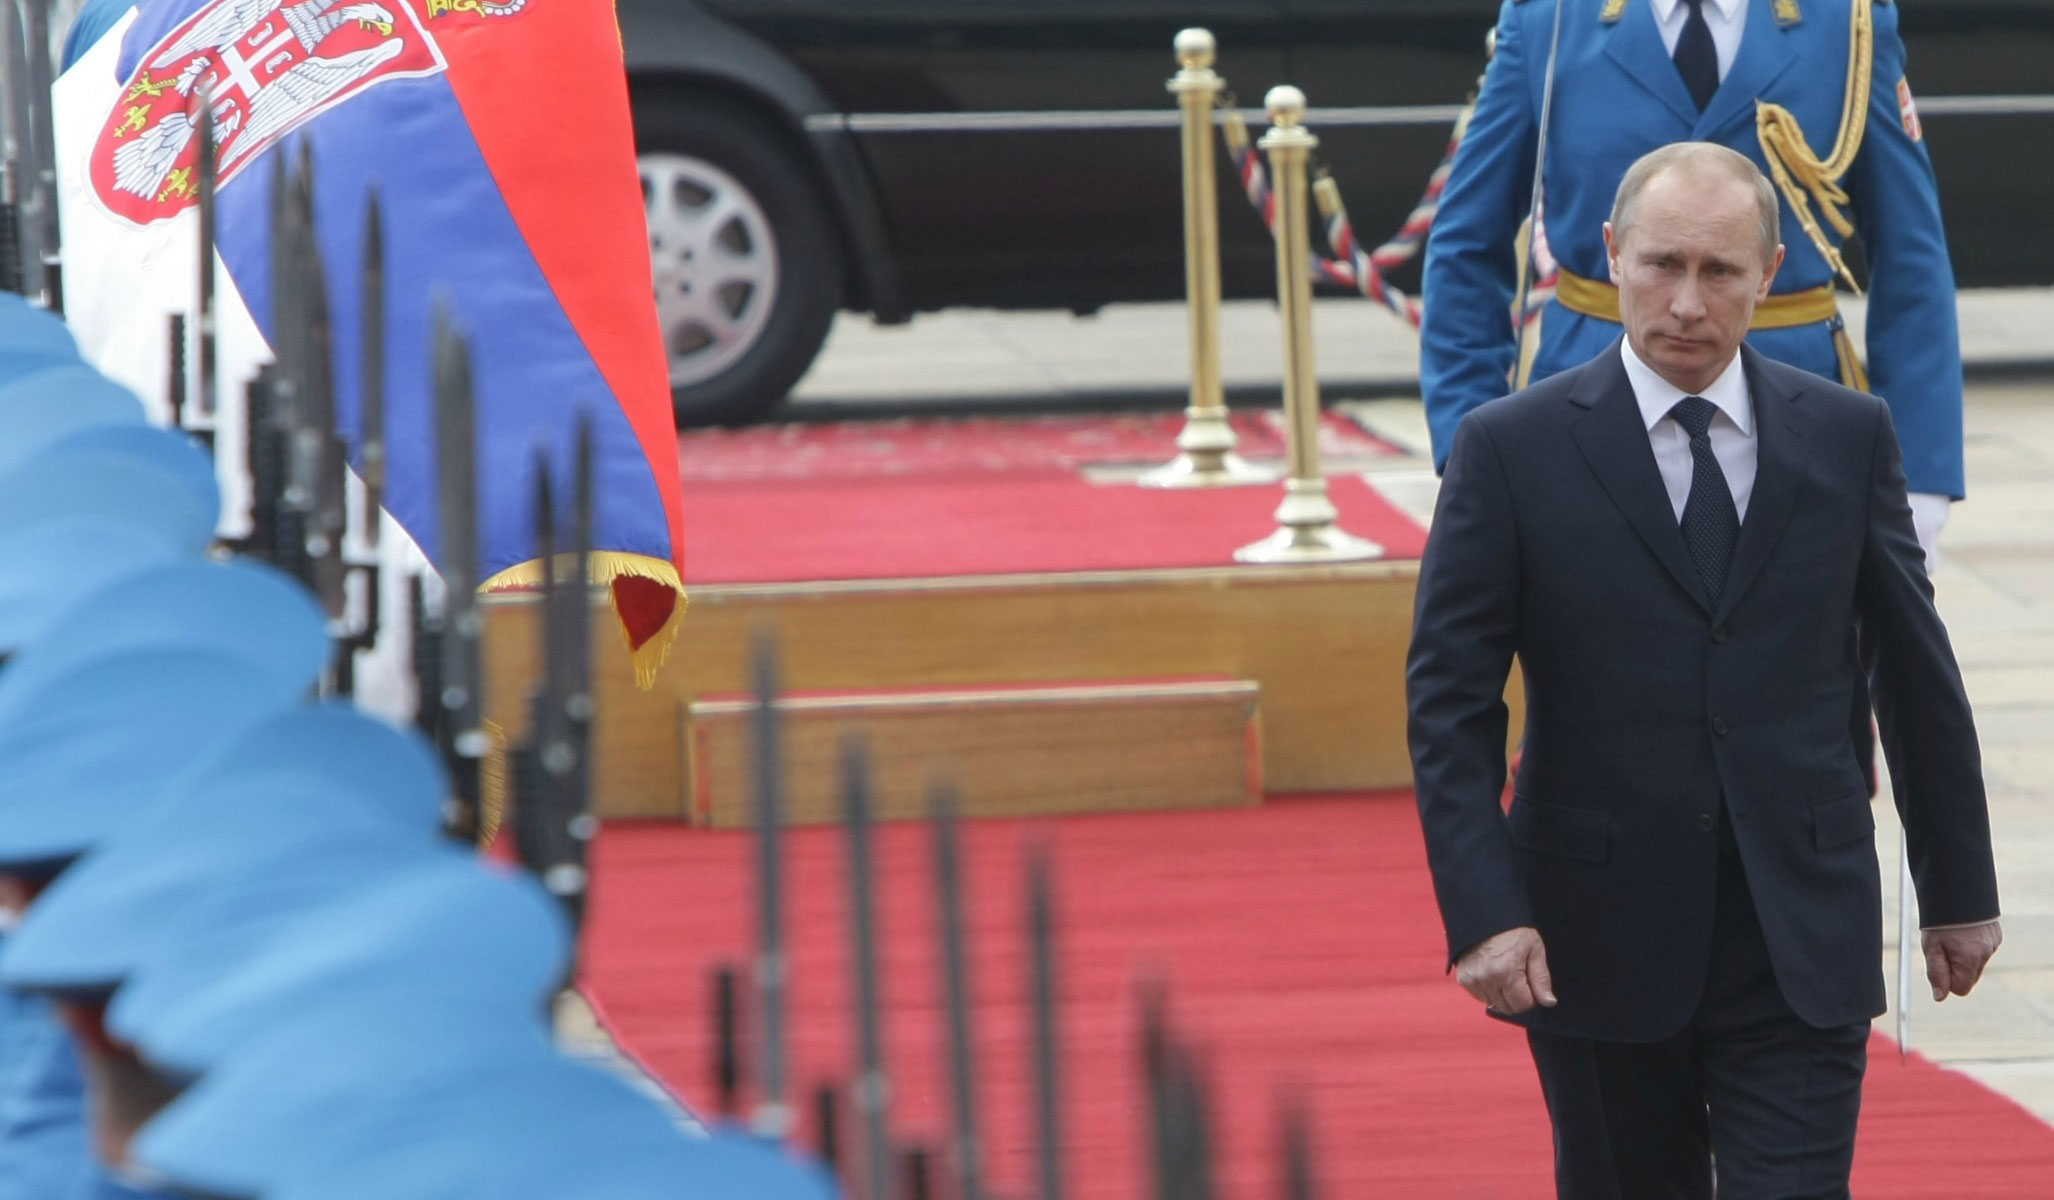 Photo: "Vladimir Putin in Serbia March 2011-1" by premier.gov.ru under CC BY 4.0.